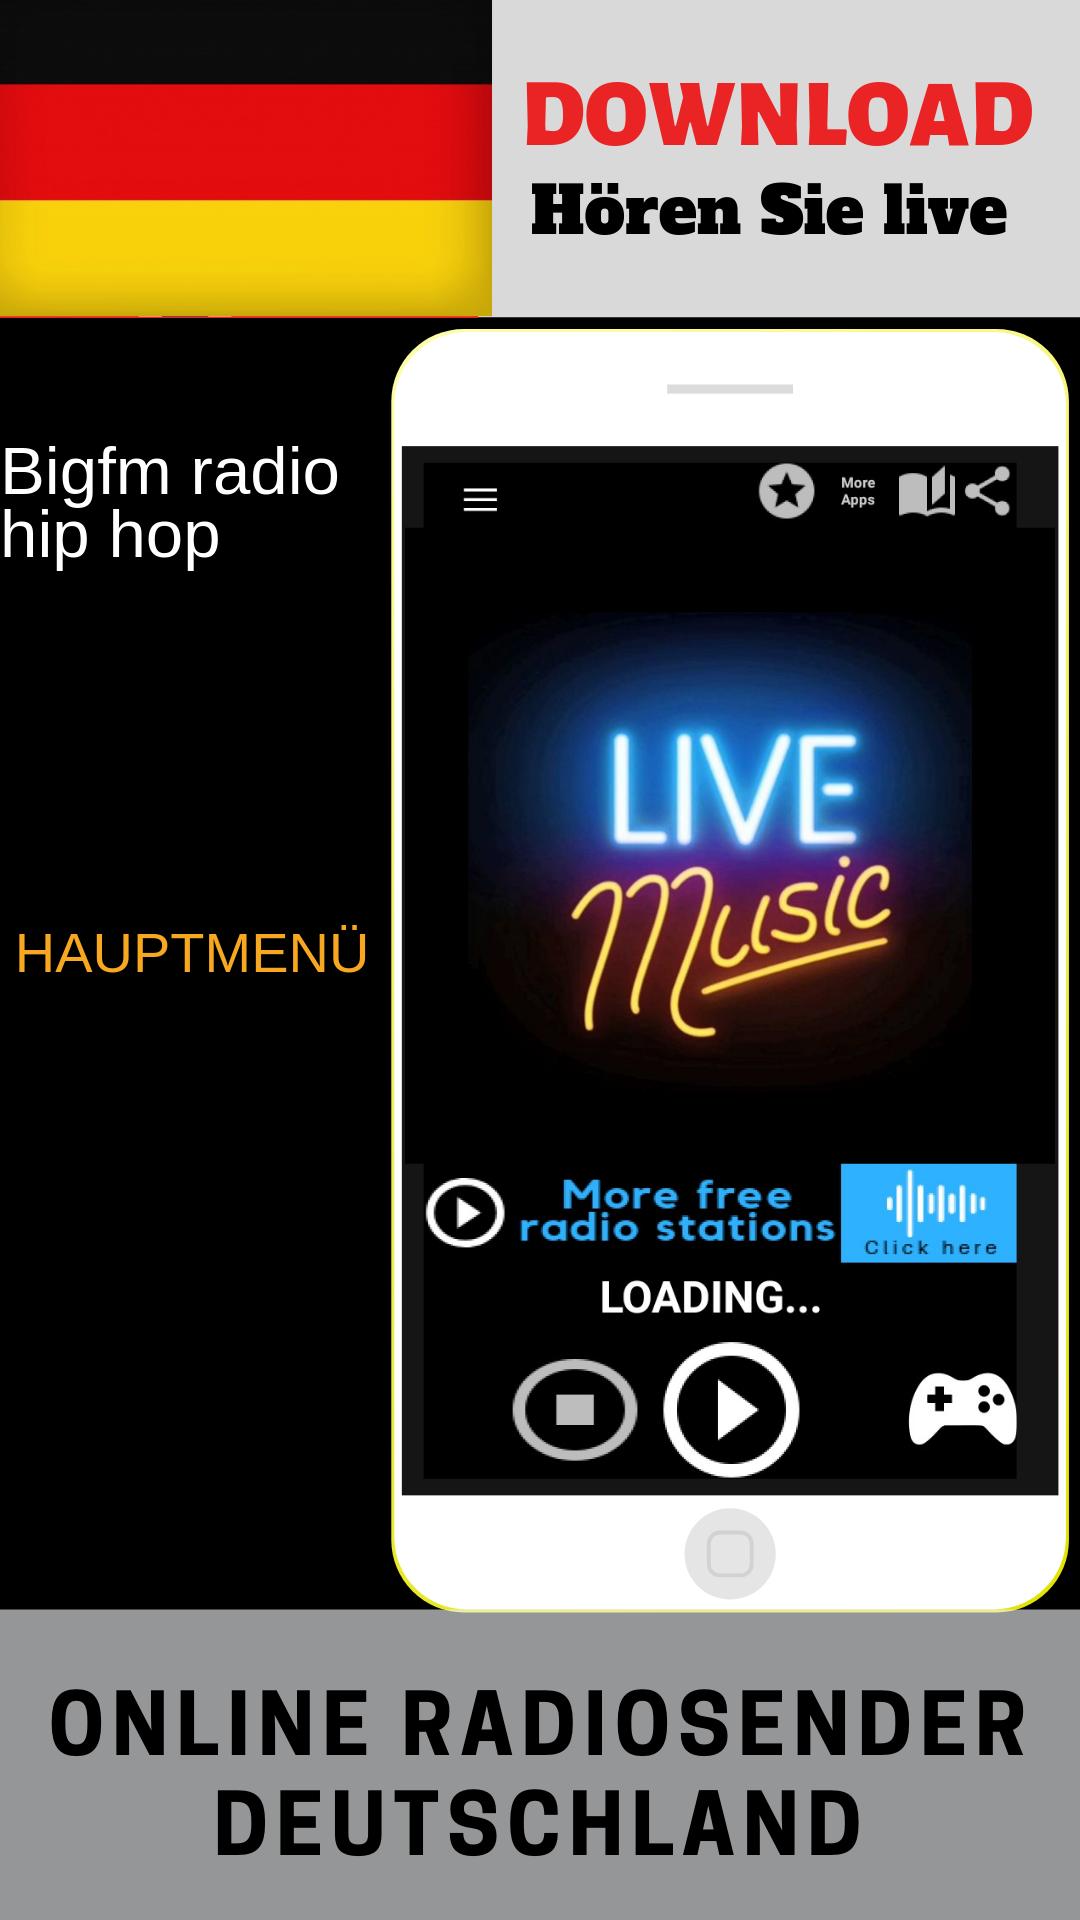 Bigfm radio hip hop for Android - APK Download